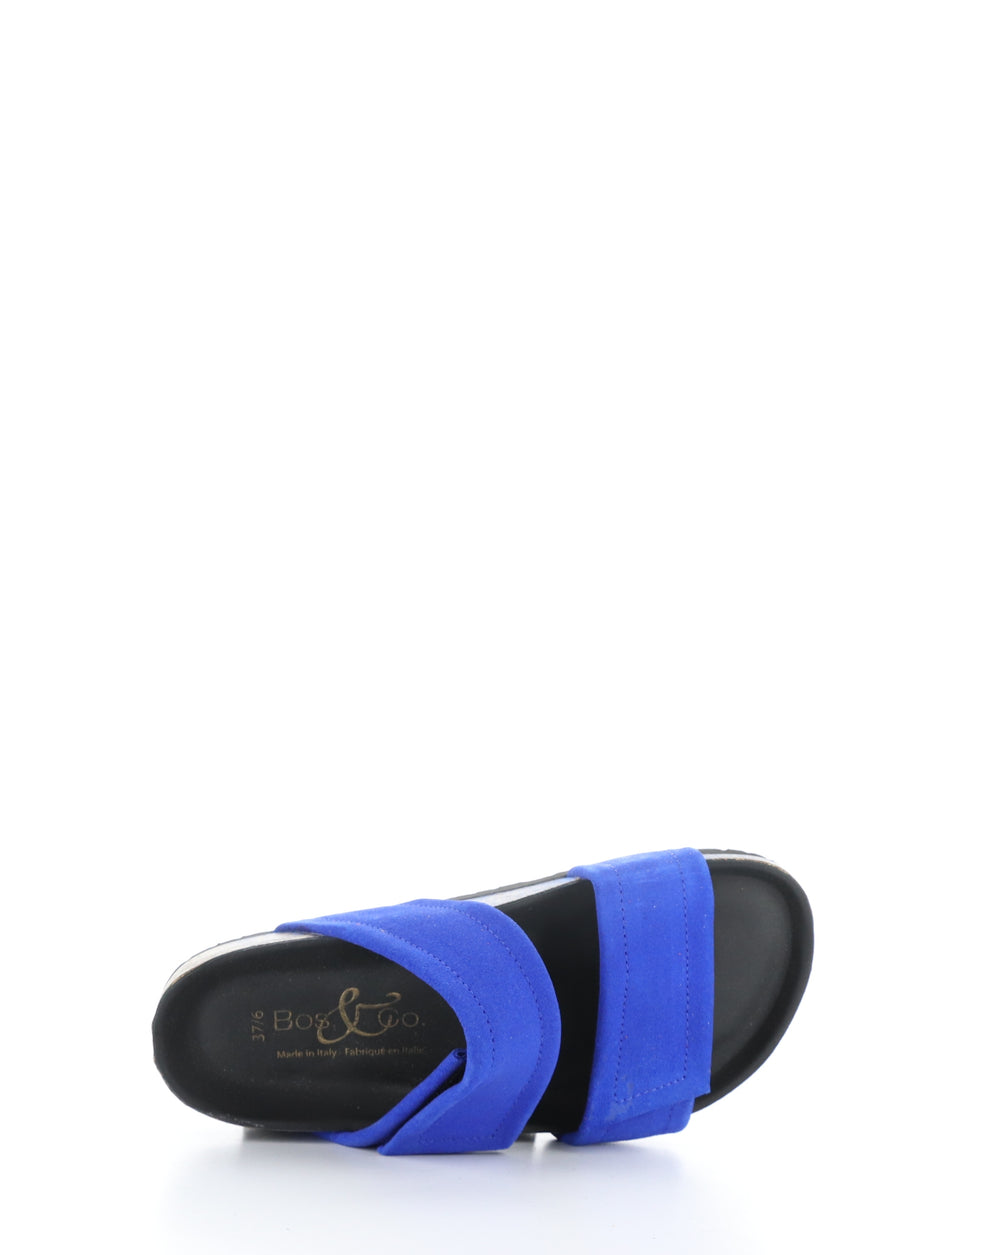 MATTEO ELECTRIC BLUE Slip-on Sandals